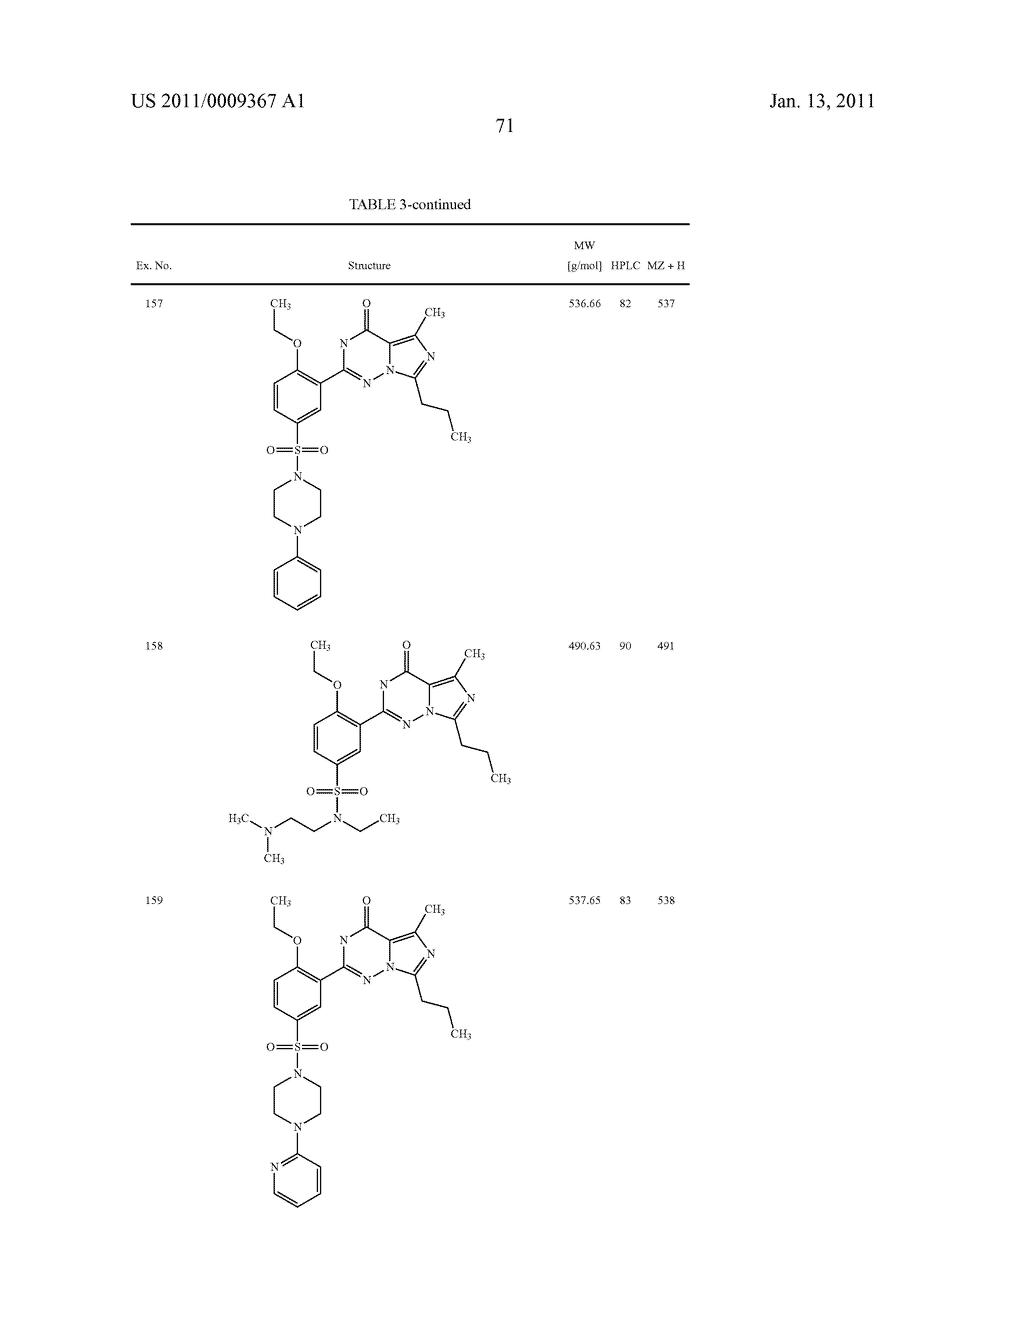 2-PHENYL SUBSTITUTED IMIDAZOTRIAZINONES AS PHOSPHODIESTERASE INHIBITORS - diagram, schematic, and image 72